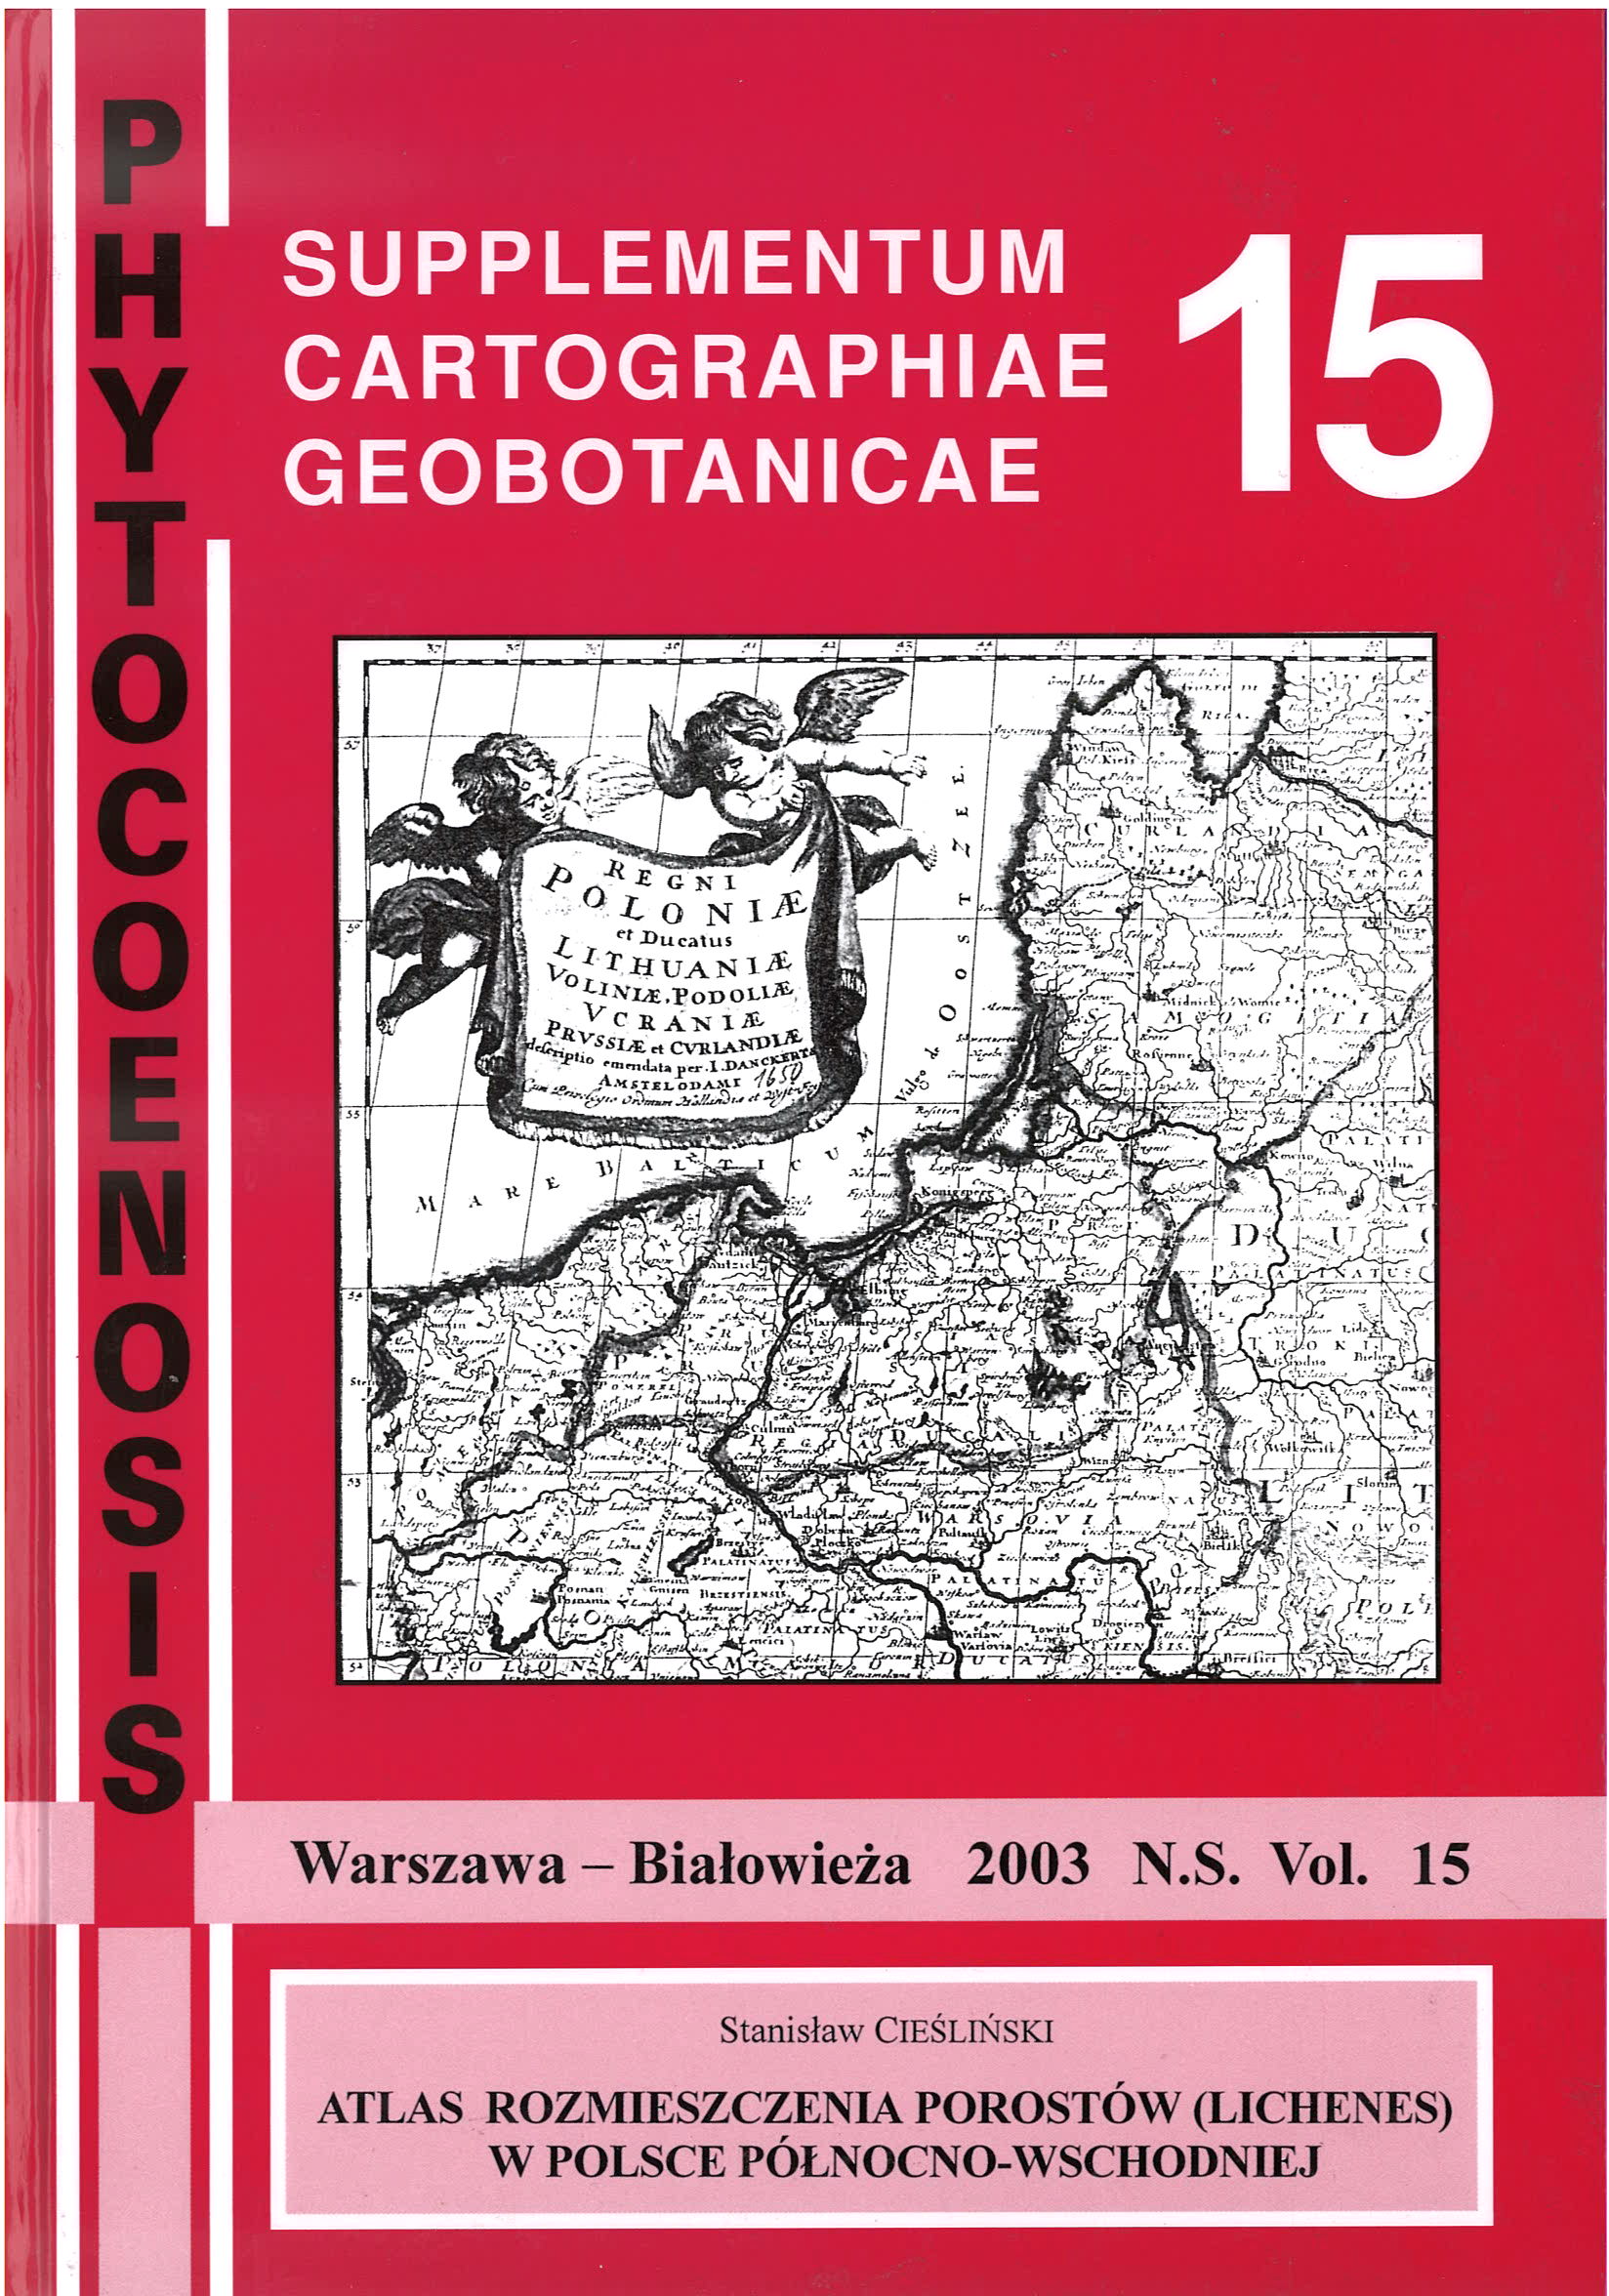 Phytocoenosis (N.S.) 15, Supplementum Cartographiae Geobotanicae 15